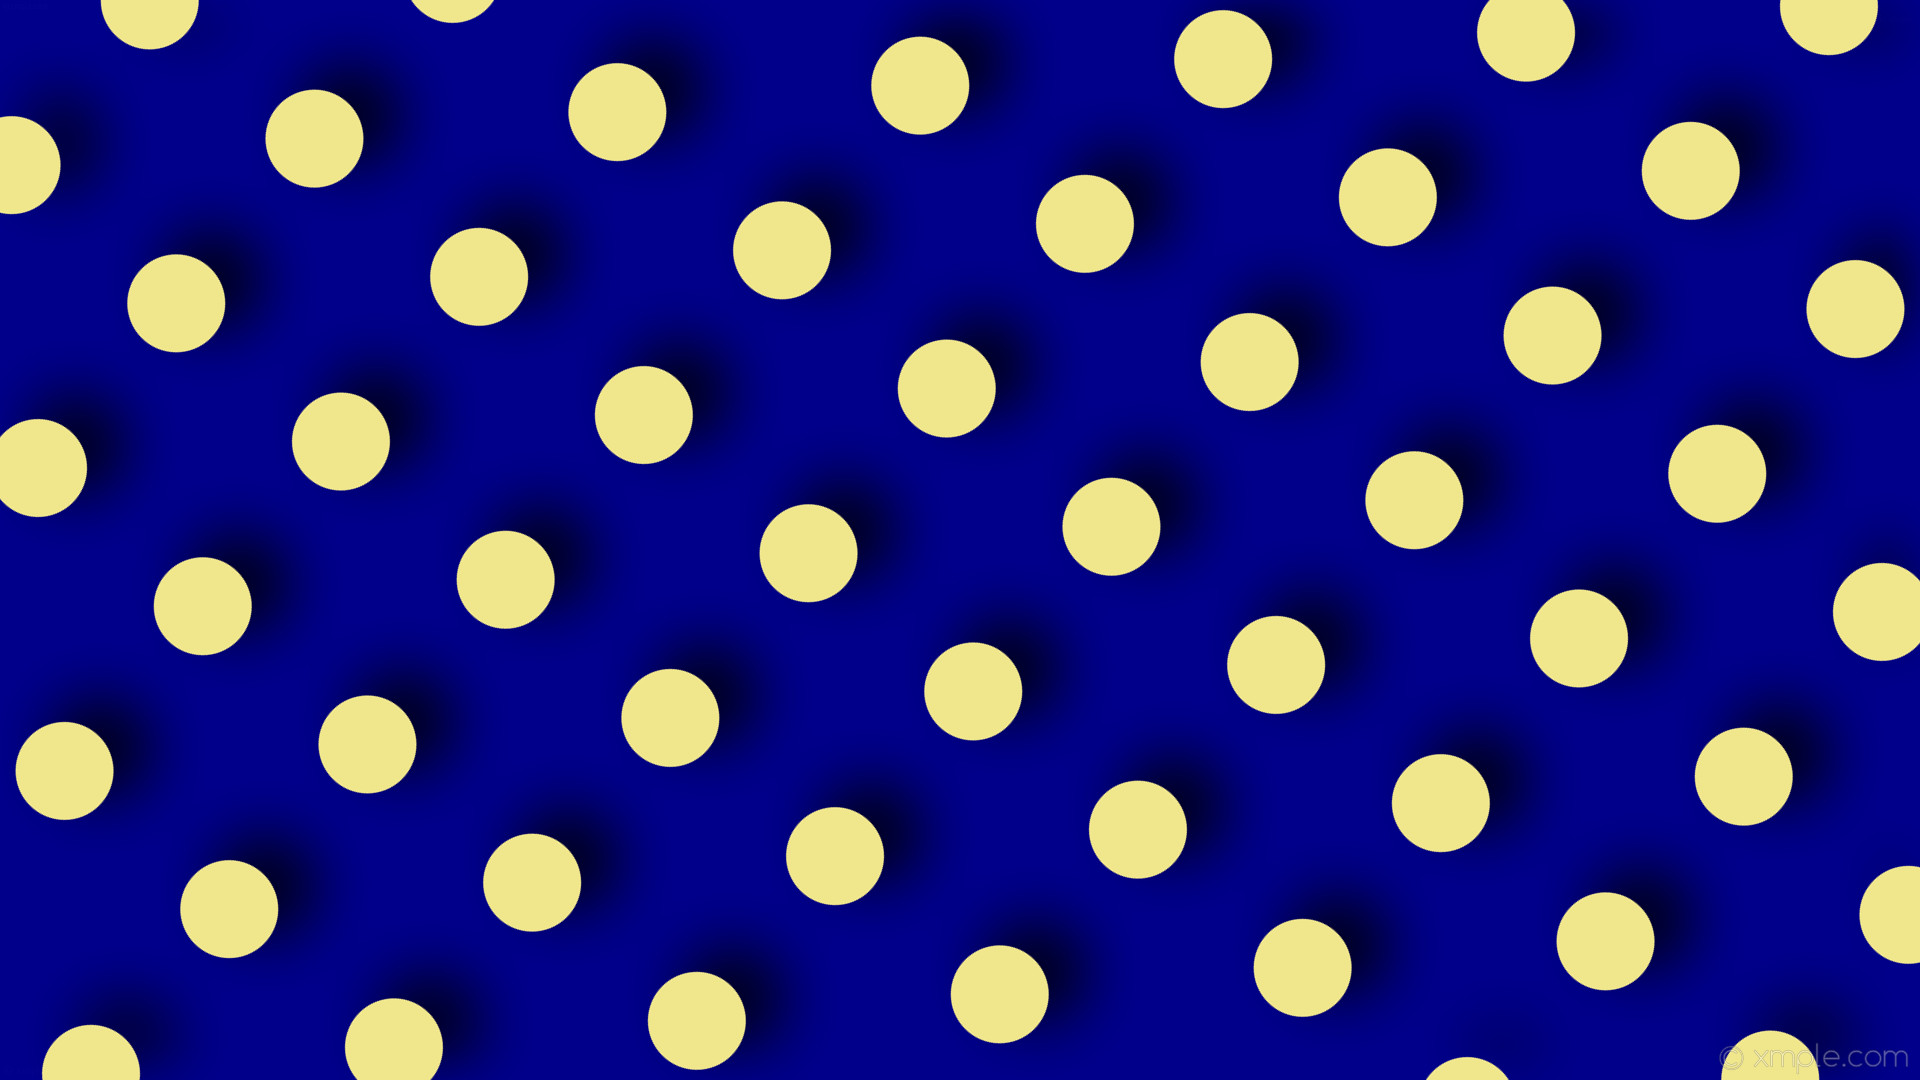 Wallpaper dots drop shadow blue yellow polka dark blue khaki b #f0e68c 50